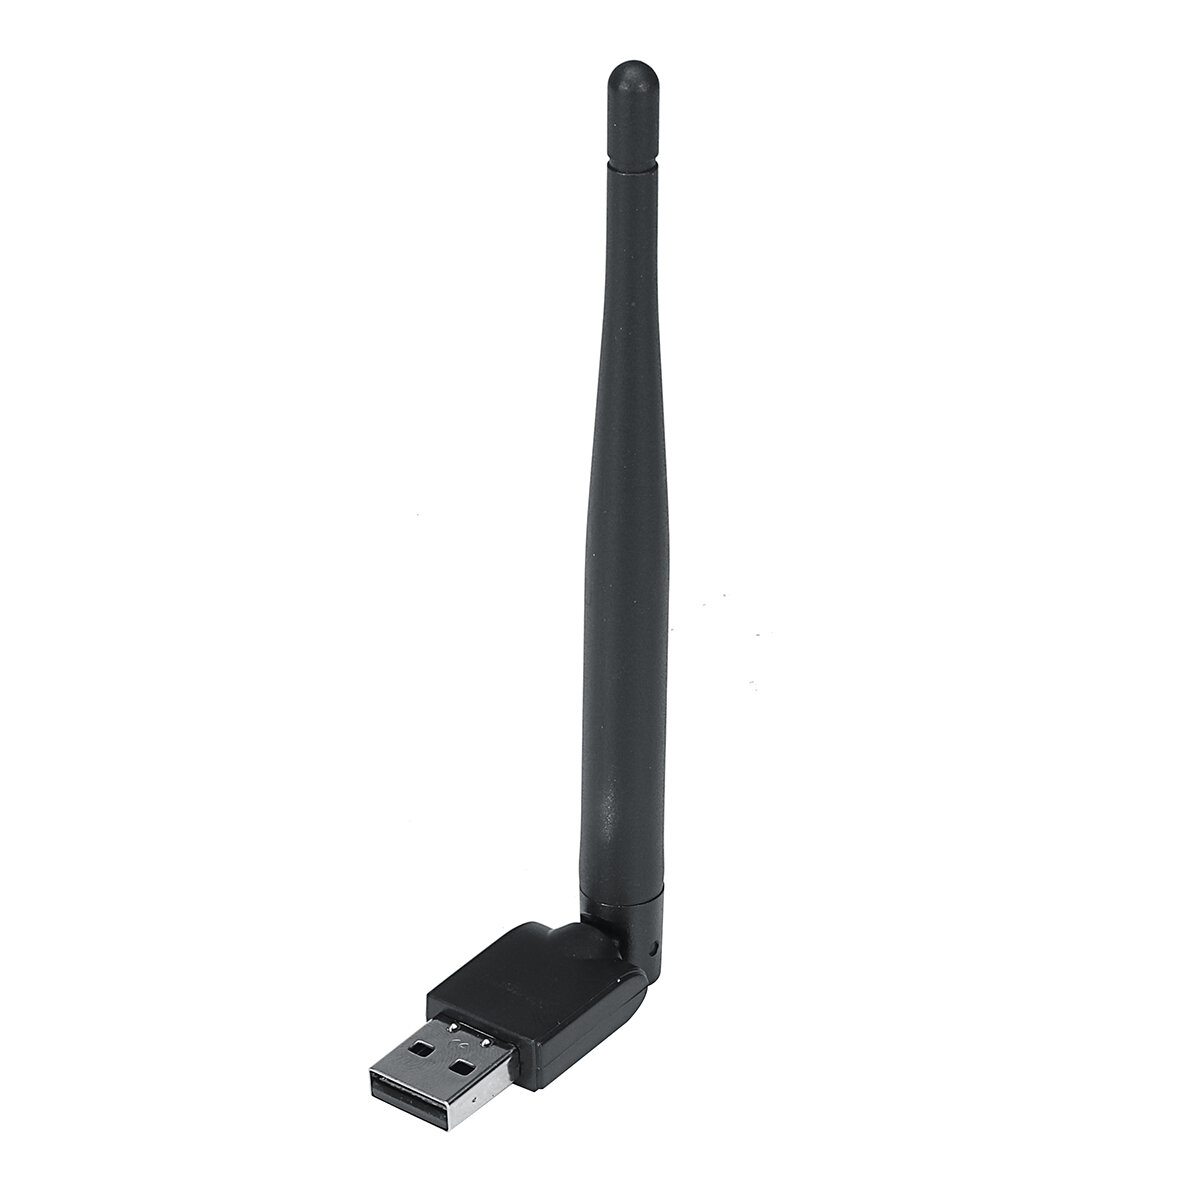 MT7601 7601 USB WIFI Adapter 150Mbps 2.4GHz Antenna USB 802.11n/g/b Ethernet Wi-Fi Dongle USB LAN Wireless Network Card